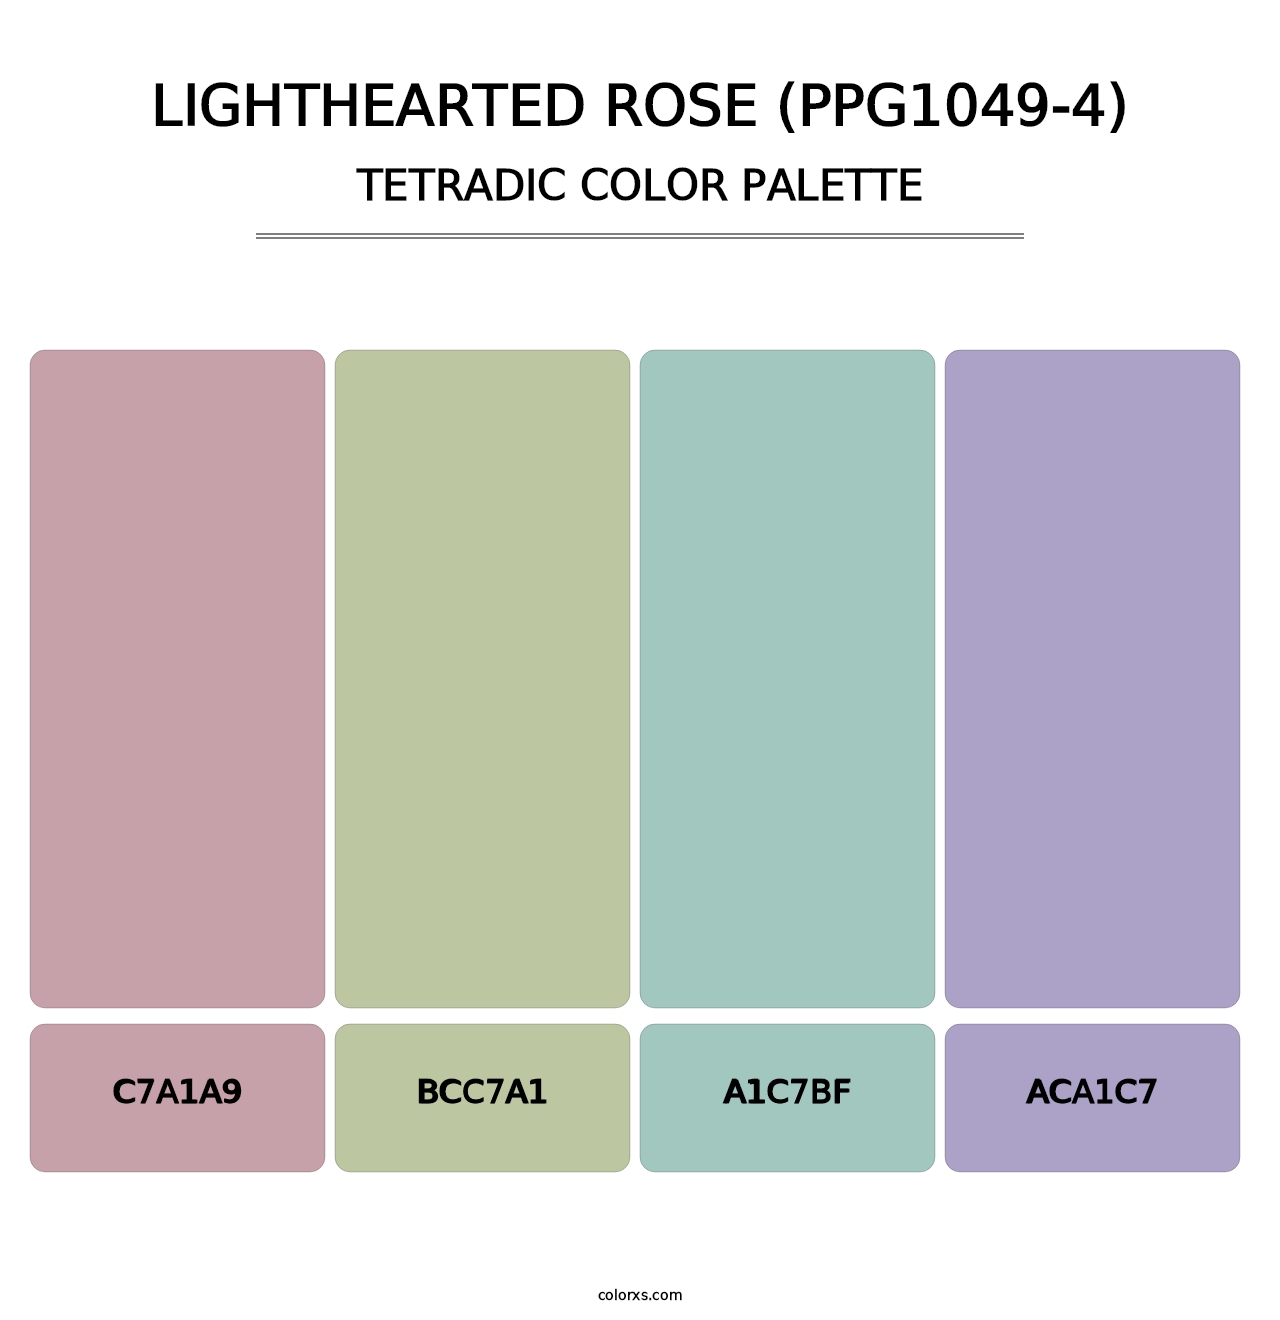 Lighthearted Rose (PPG1049-4) - Tetradic Color Palette